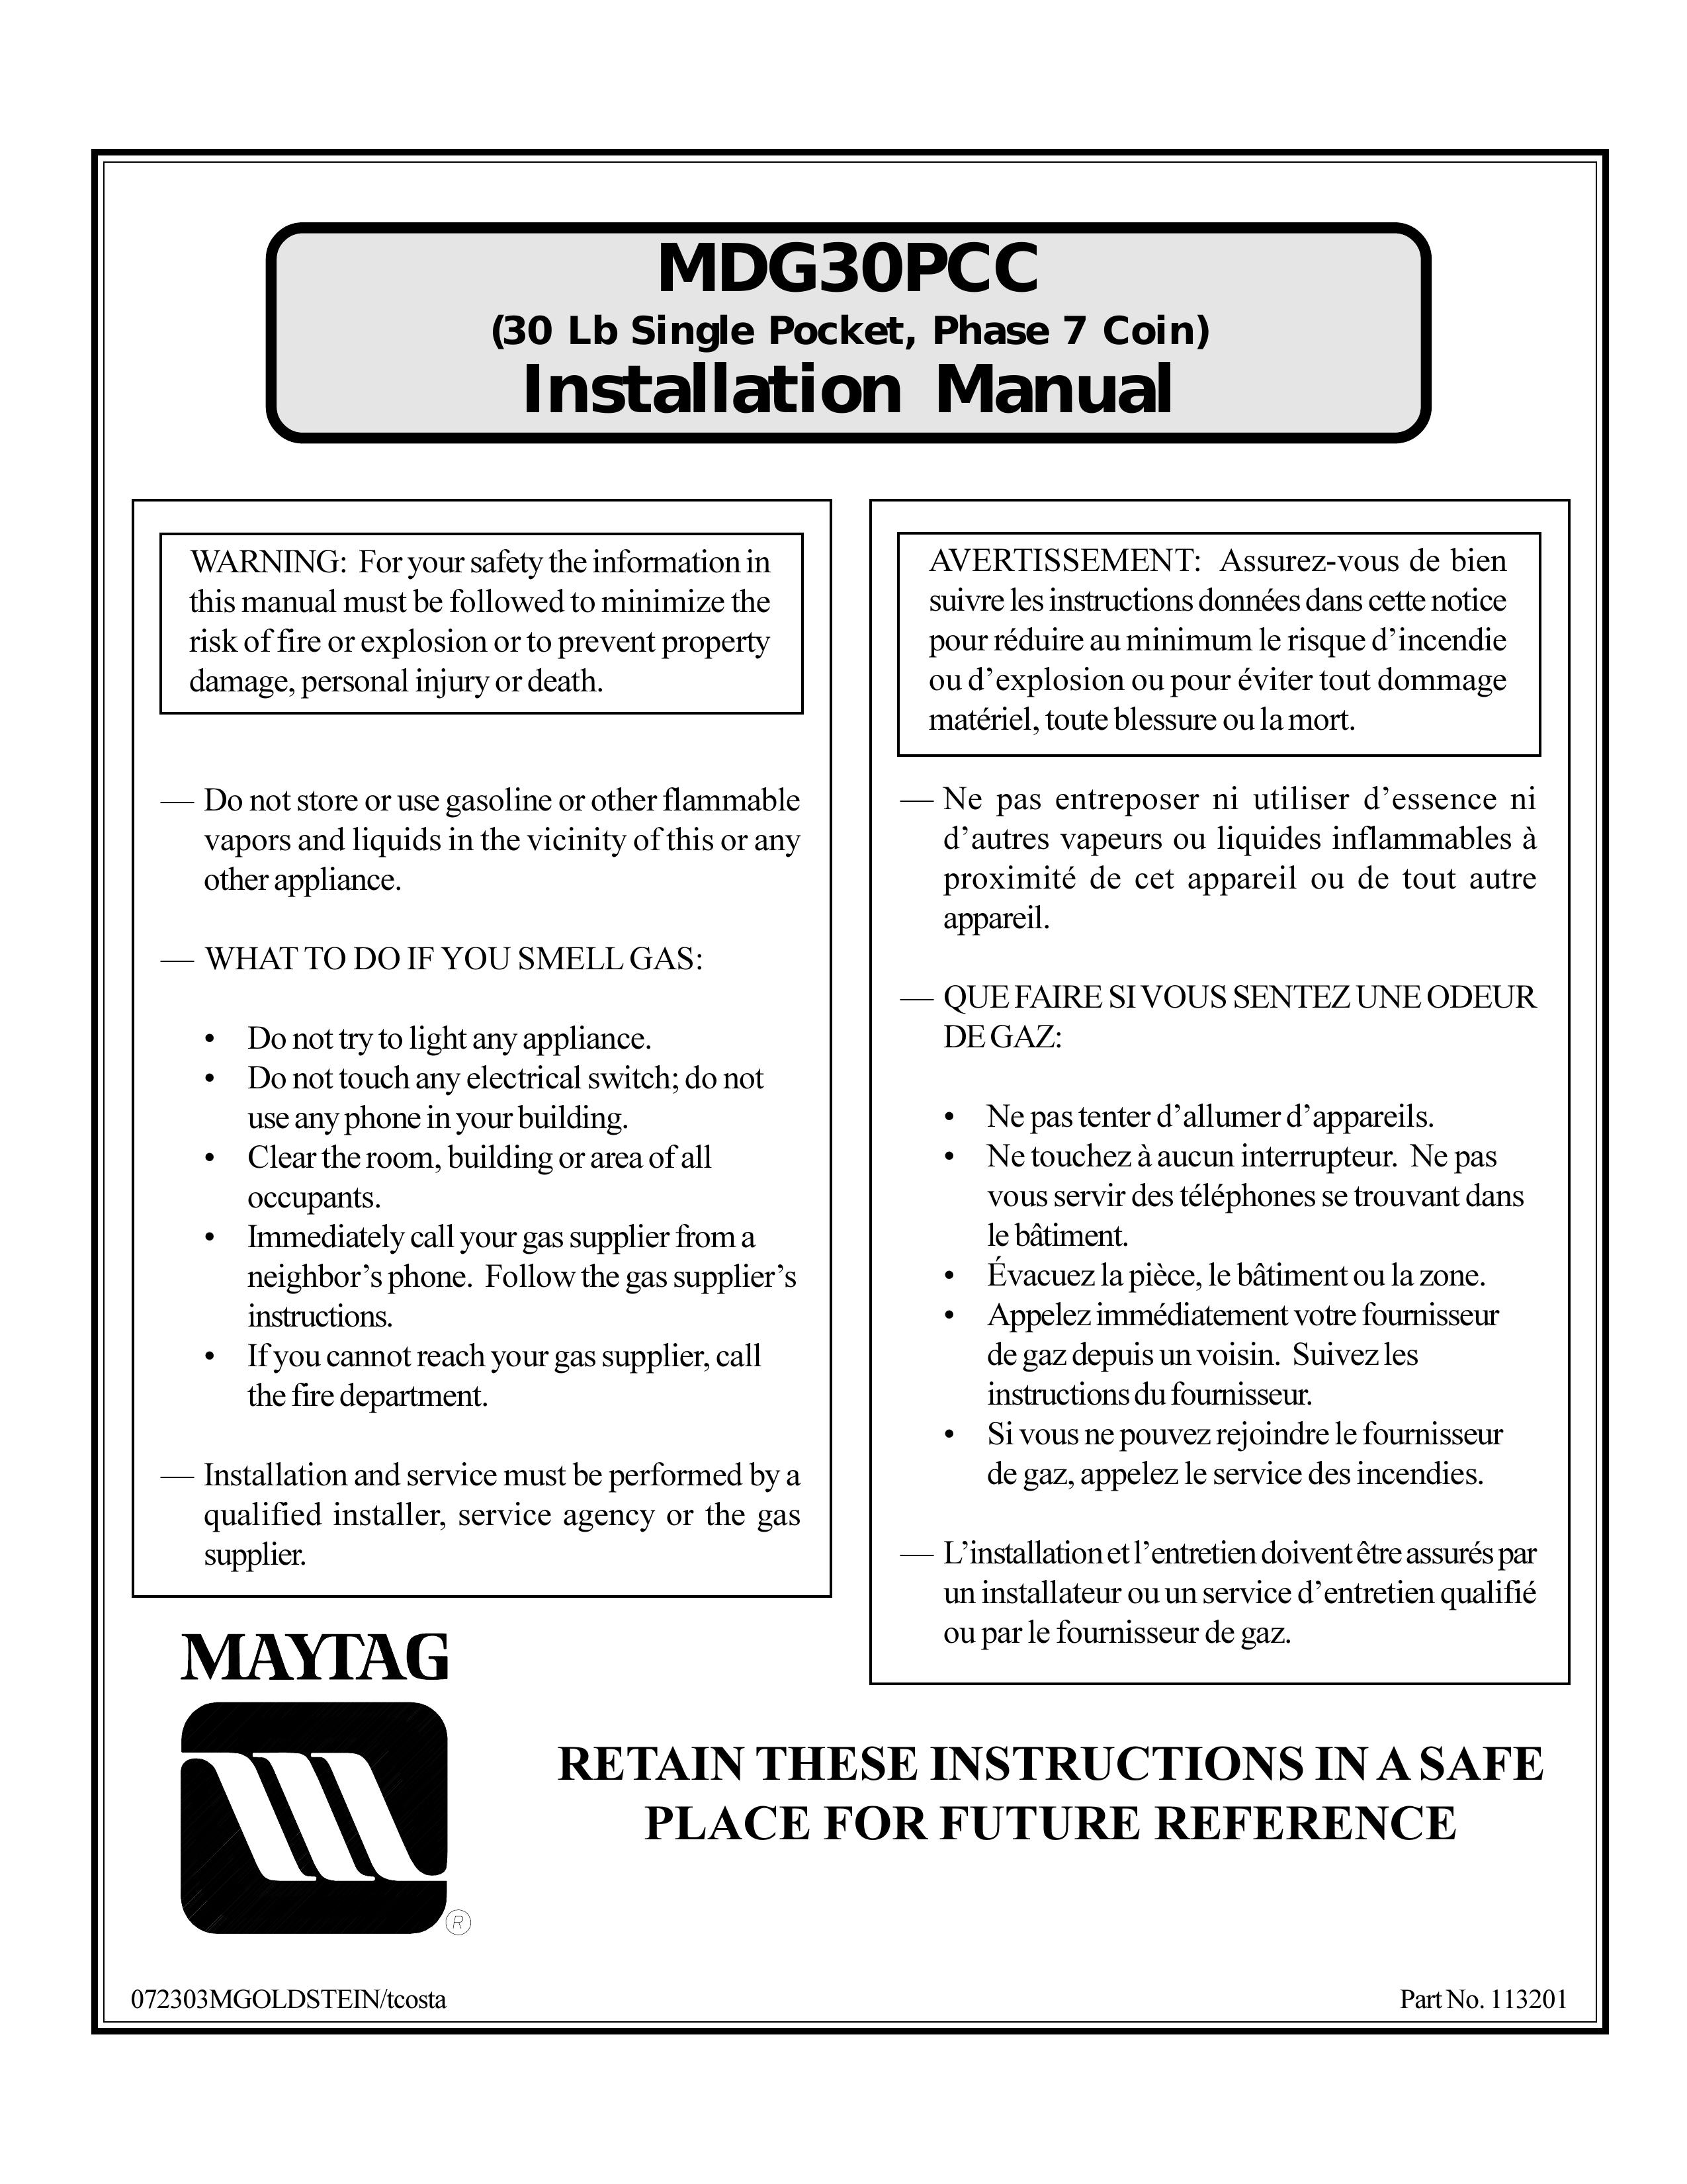 Maytag MDG30PCC Washer/Dryer User Manual